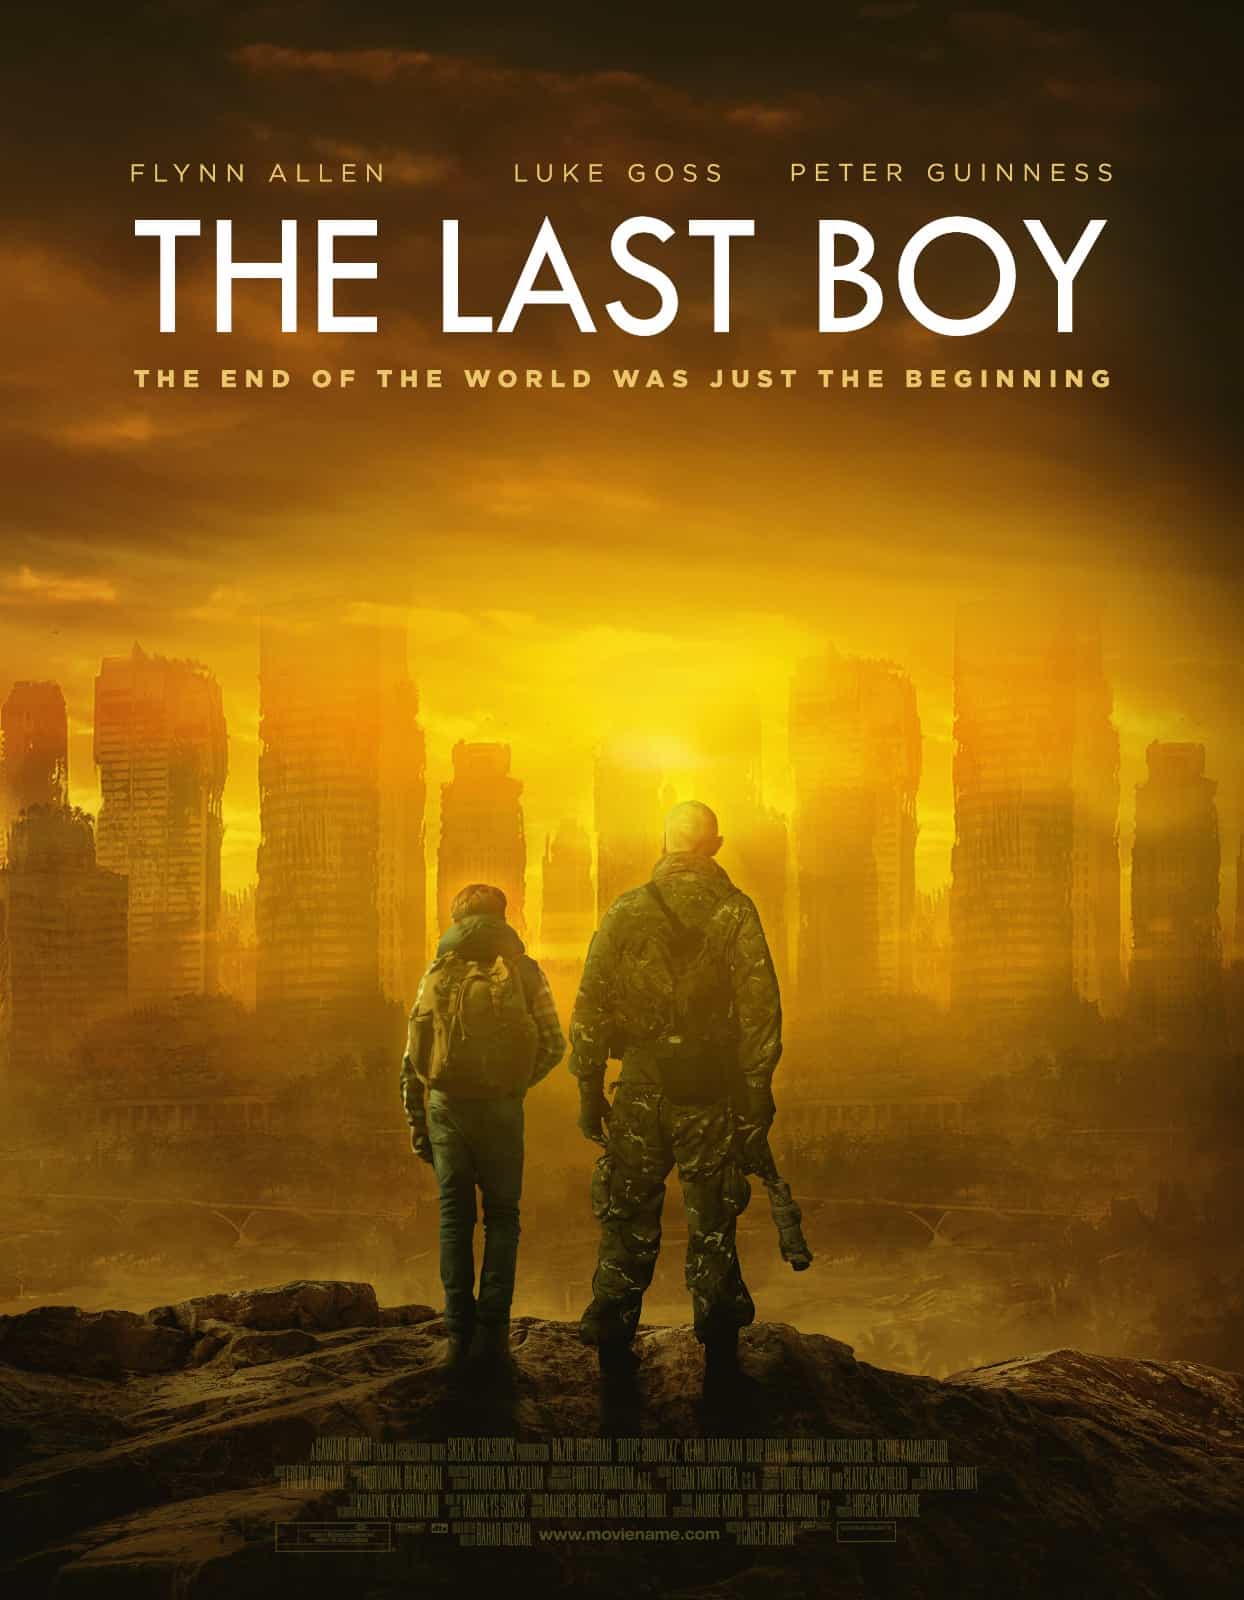 The Last Boy (2019) เดอะลาสบอย